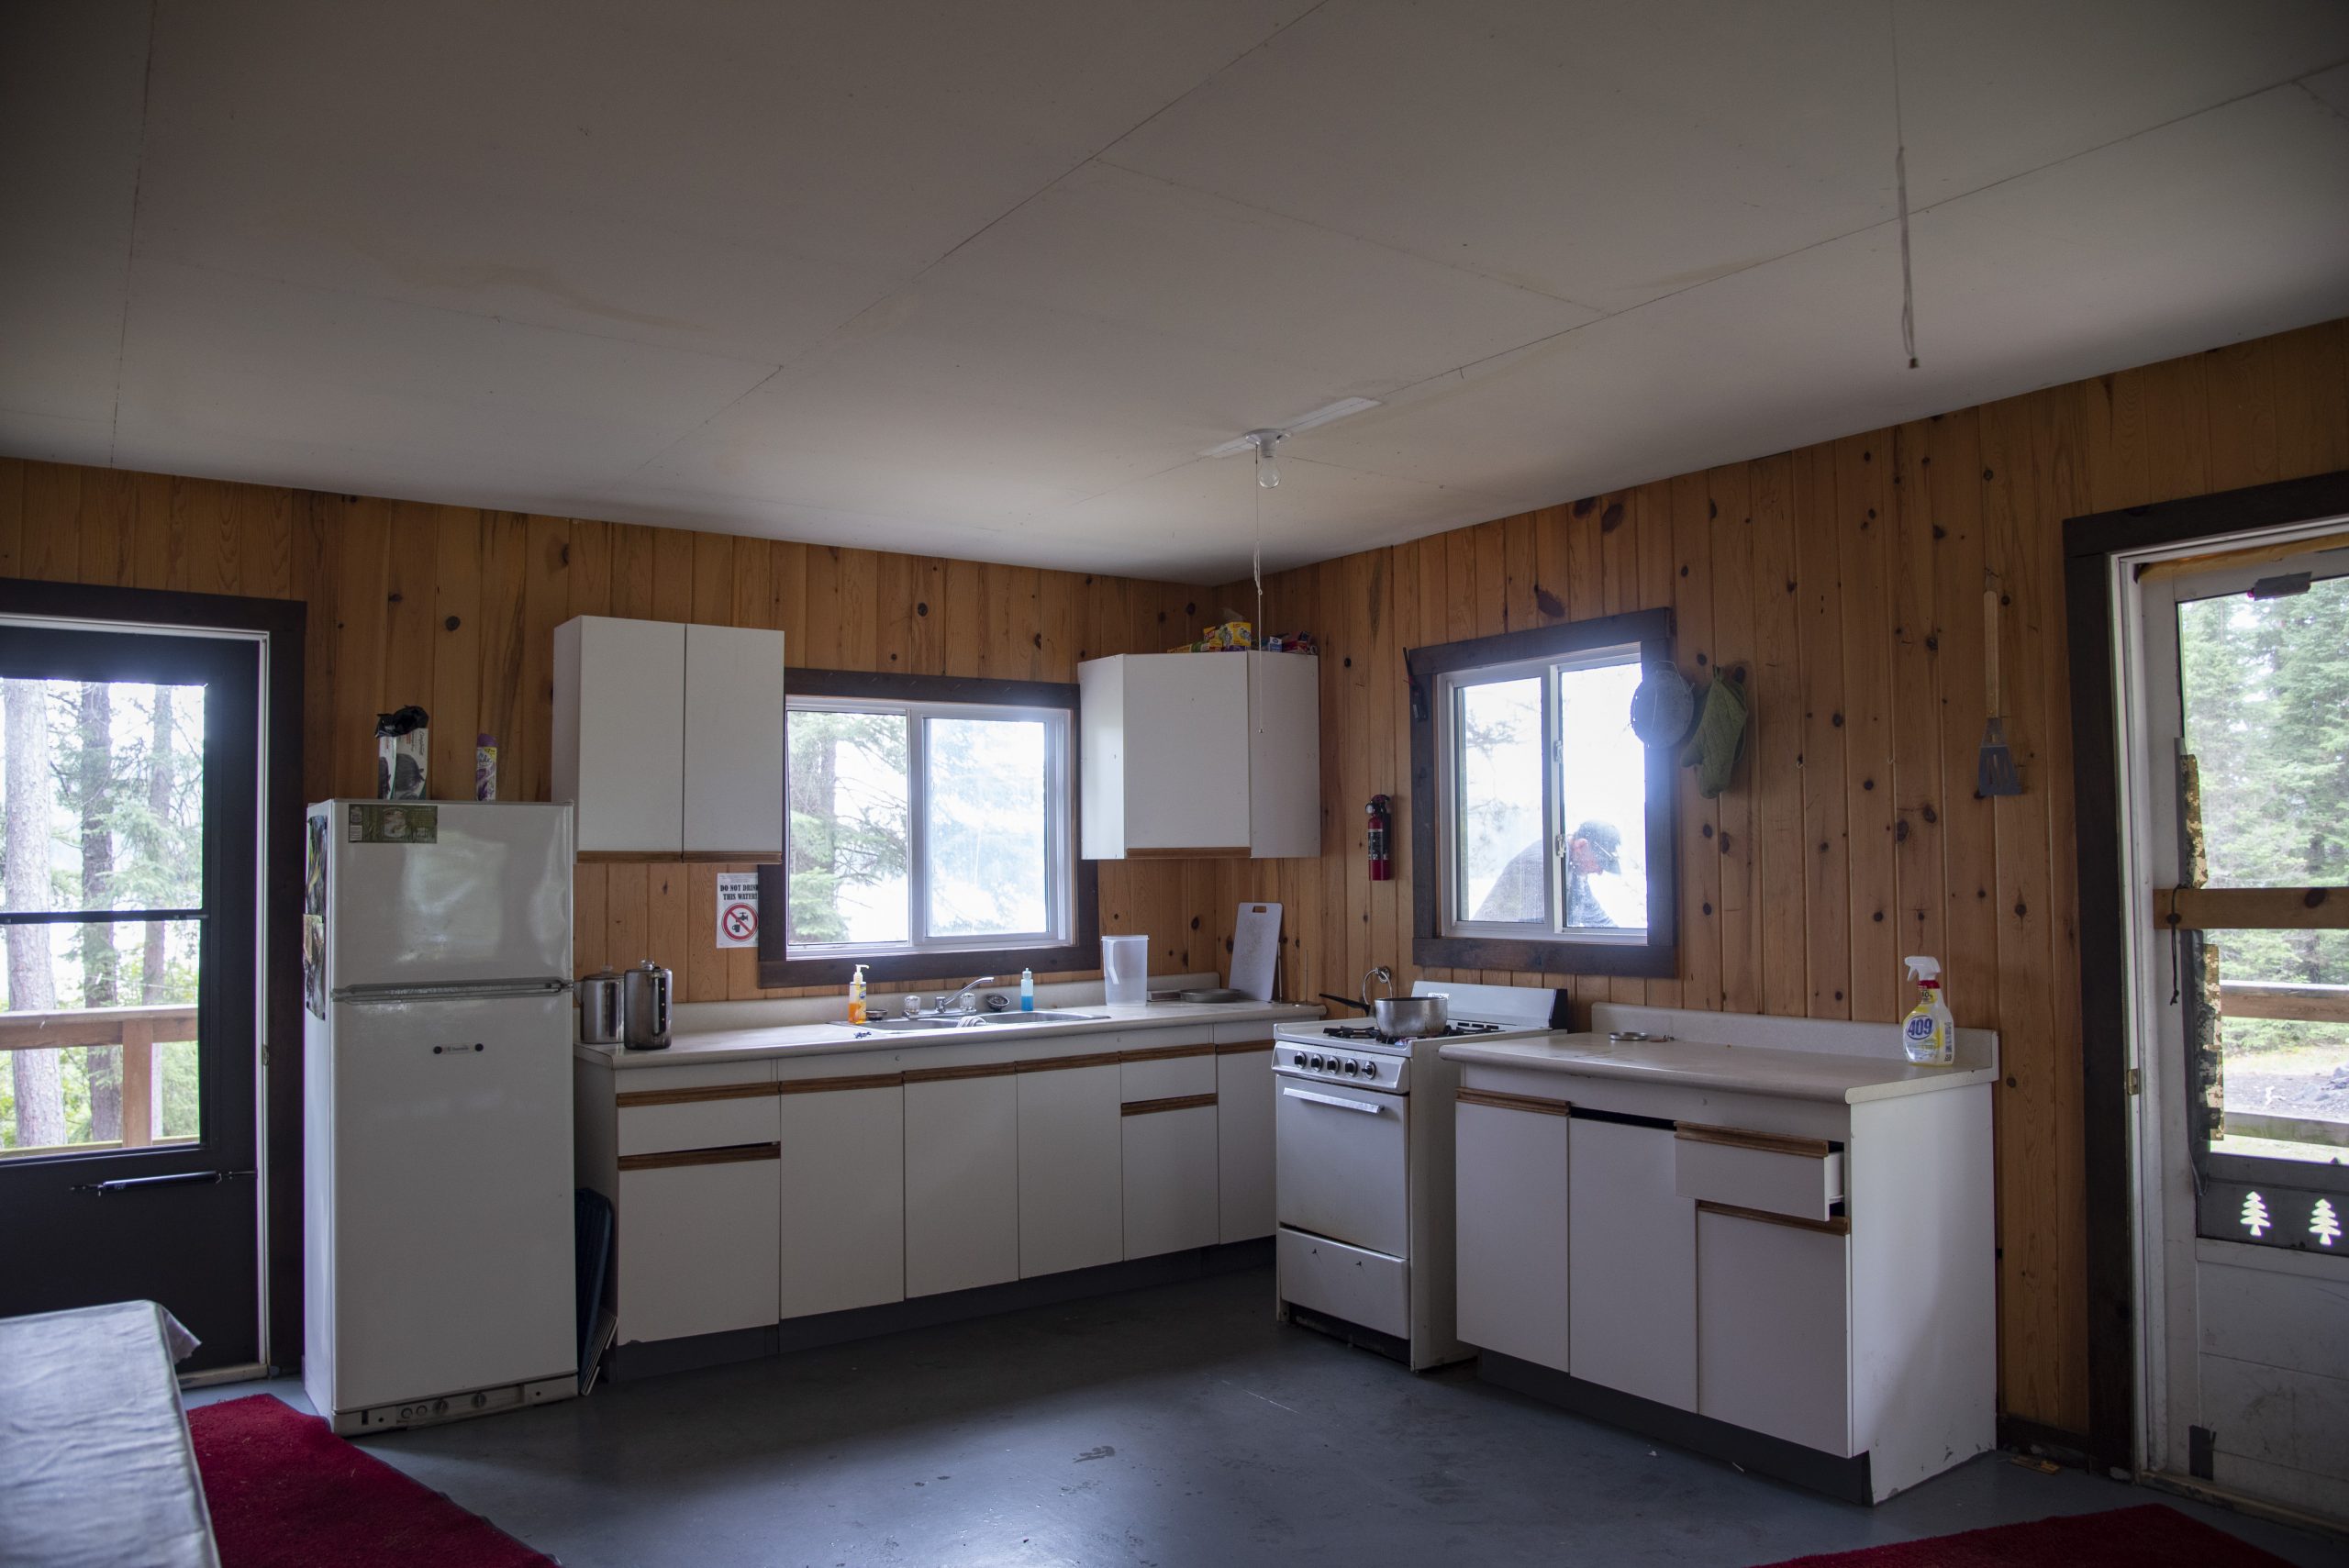 Dimple Lake cabin kitchen